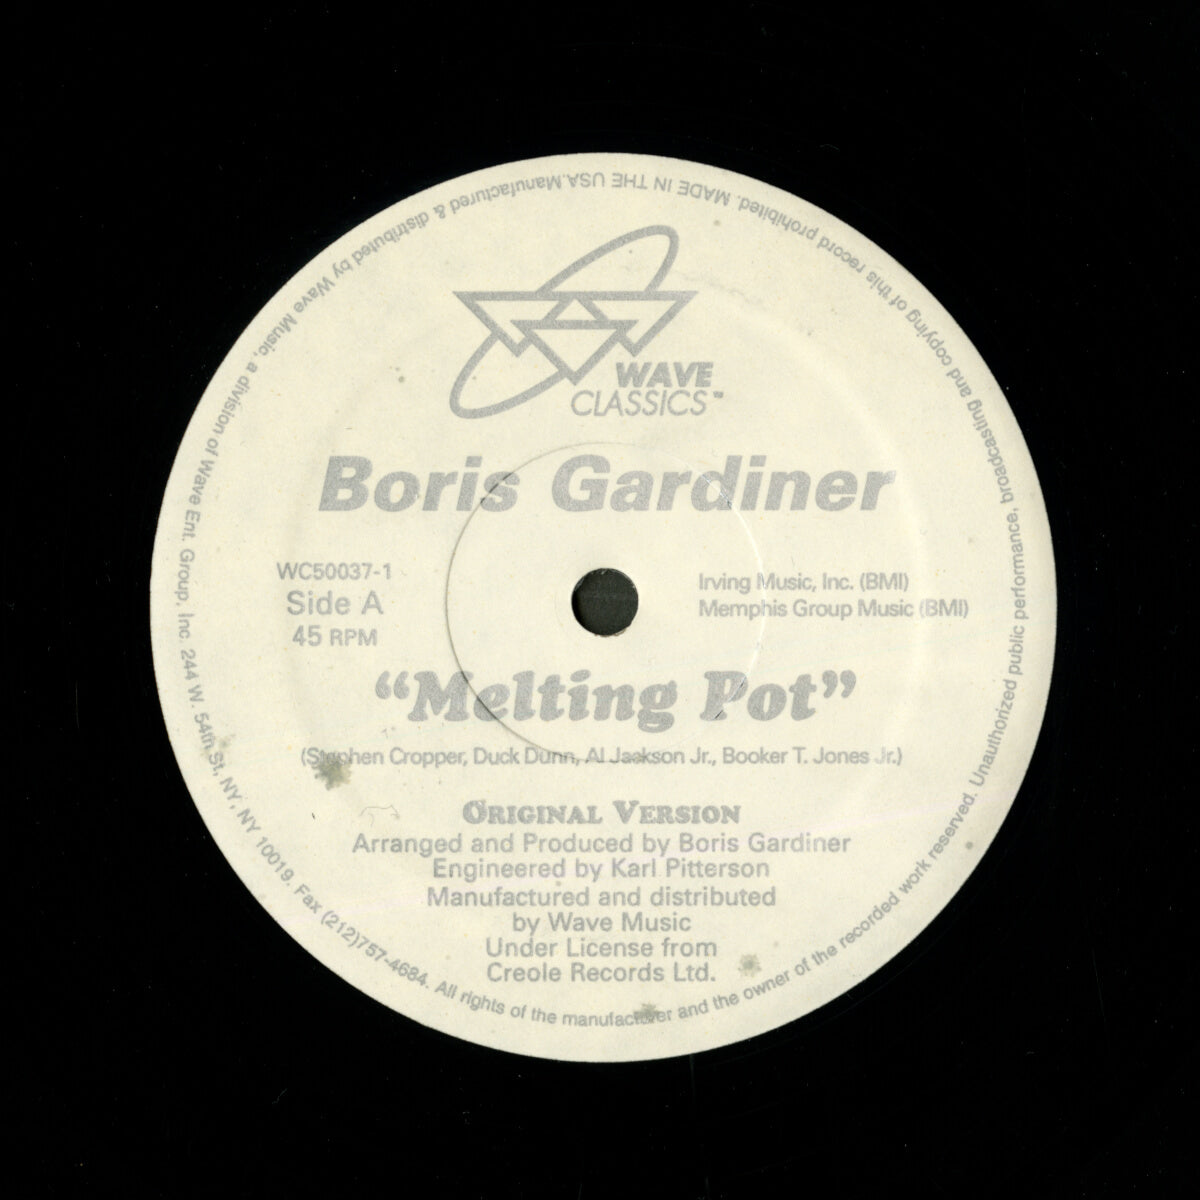 Boris Gardiner – Melting Pot